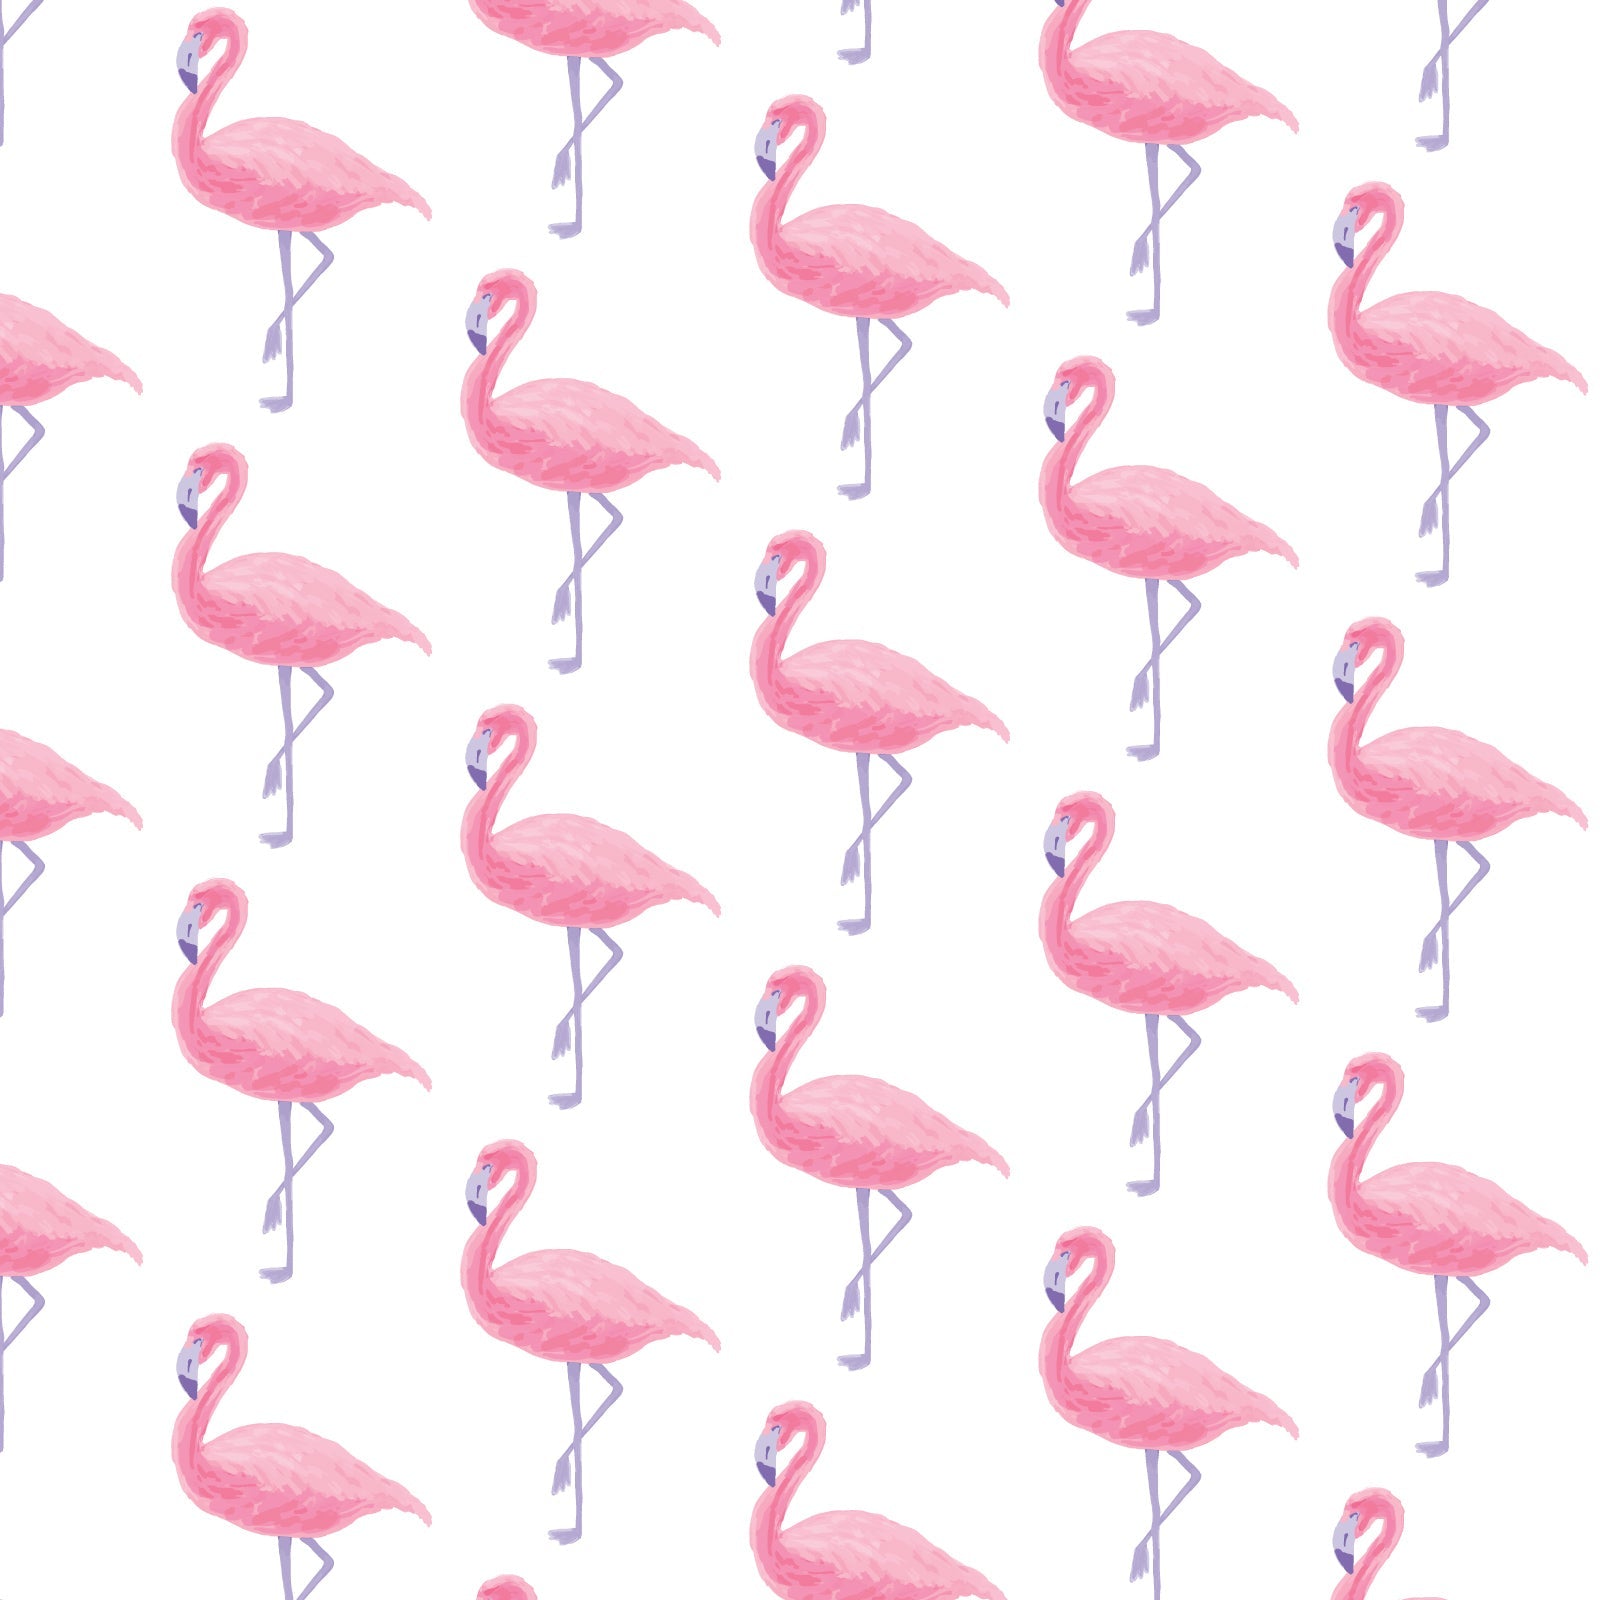 Parker Girls' Pima Cotton Zipper Pajama - Fabulous Flamingos